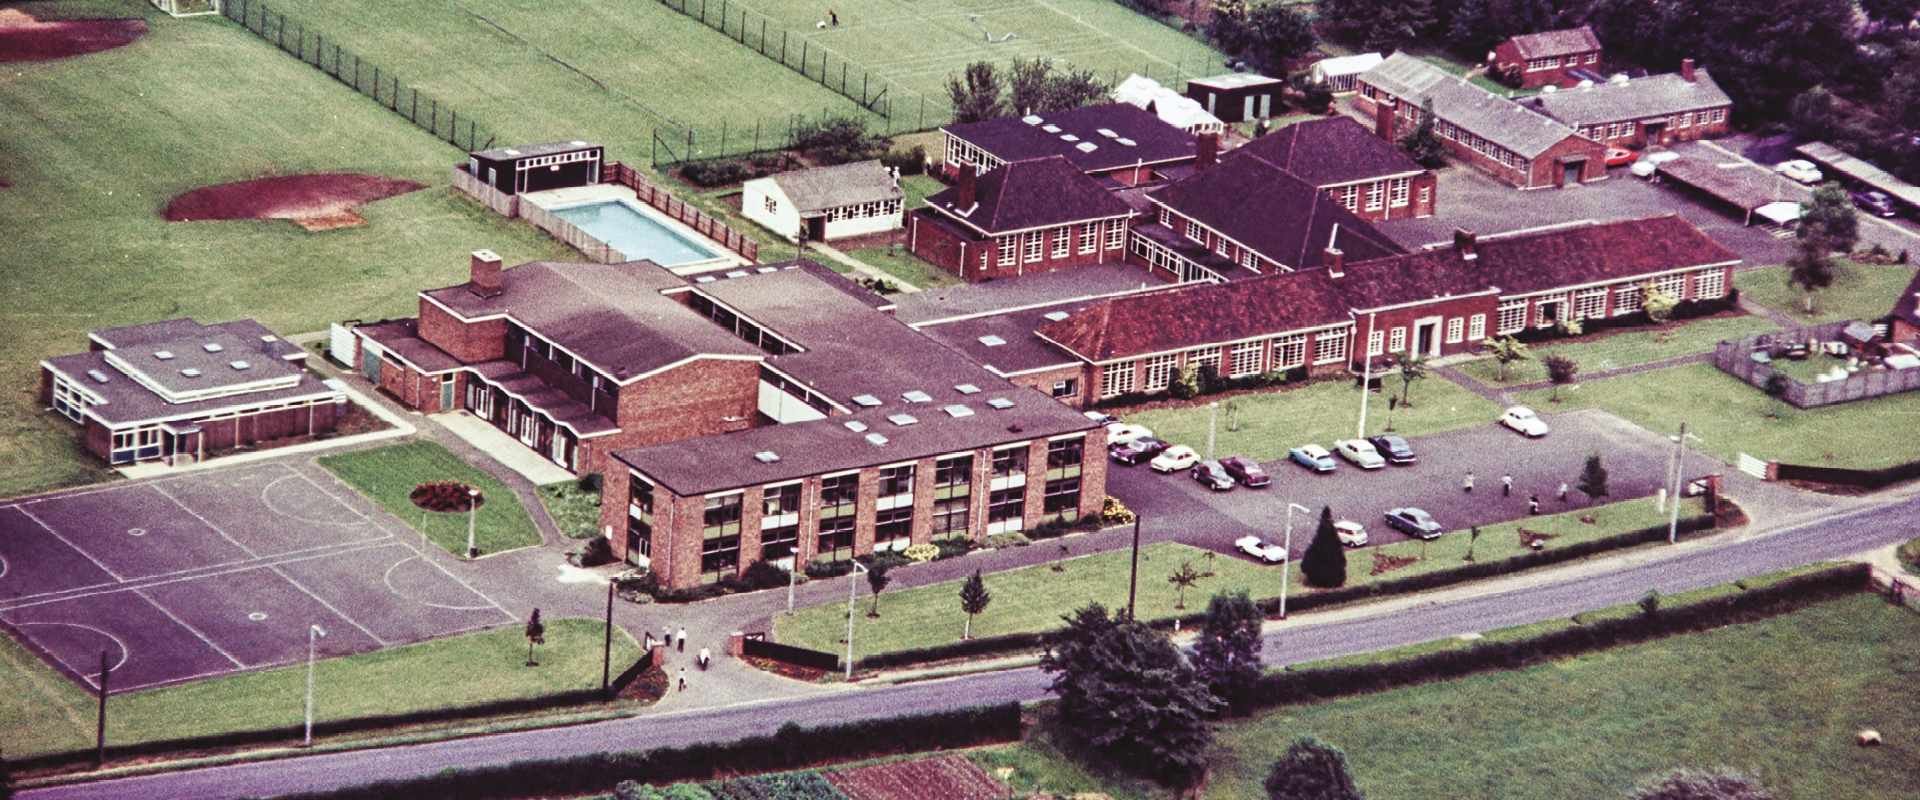 Thomas Mills High School History in 1960s